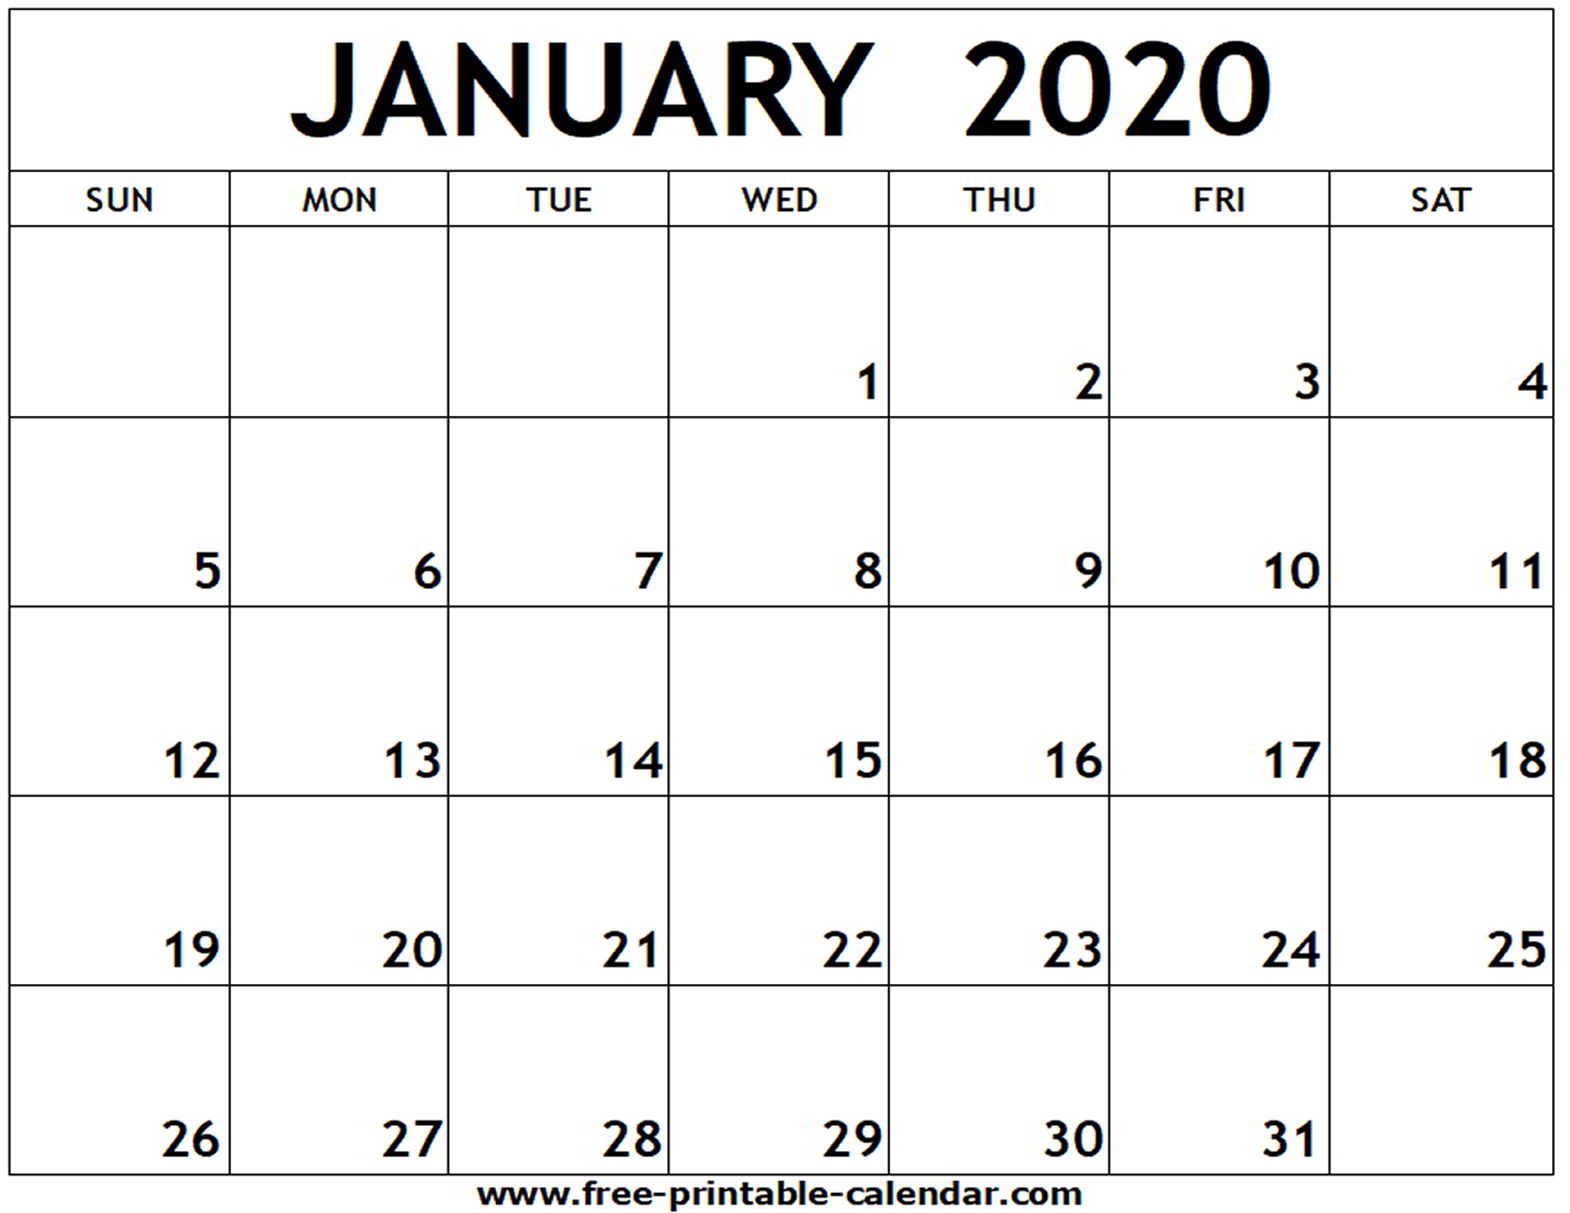 Blank Calendar For 2020 - Tunu.redmini.co